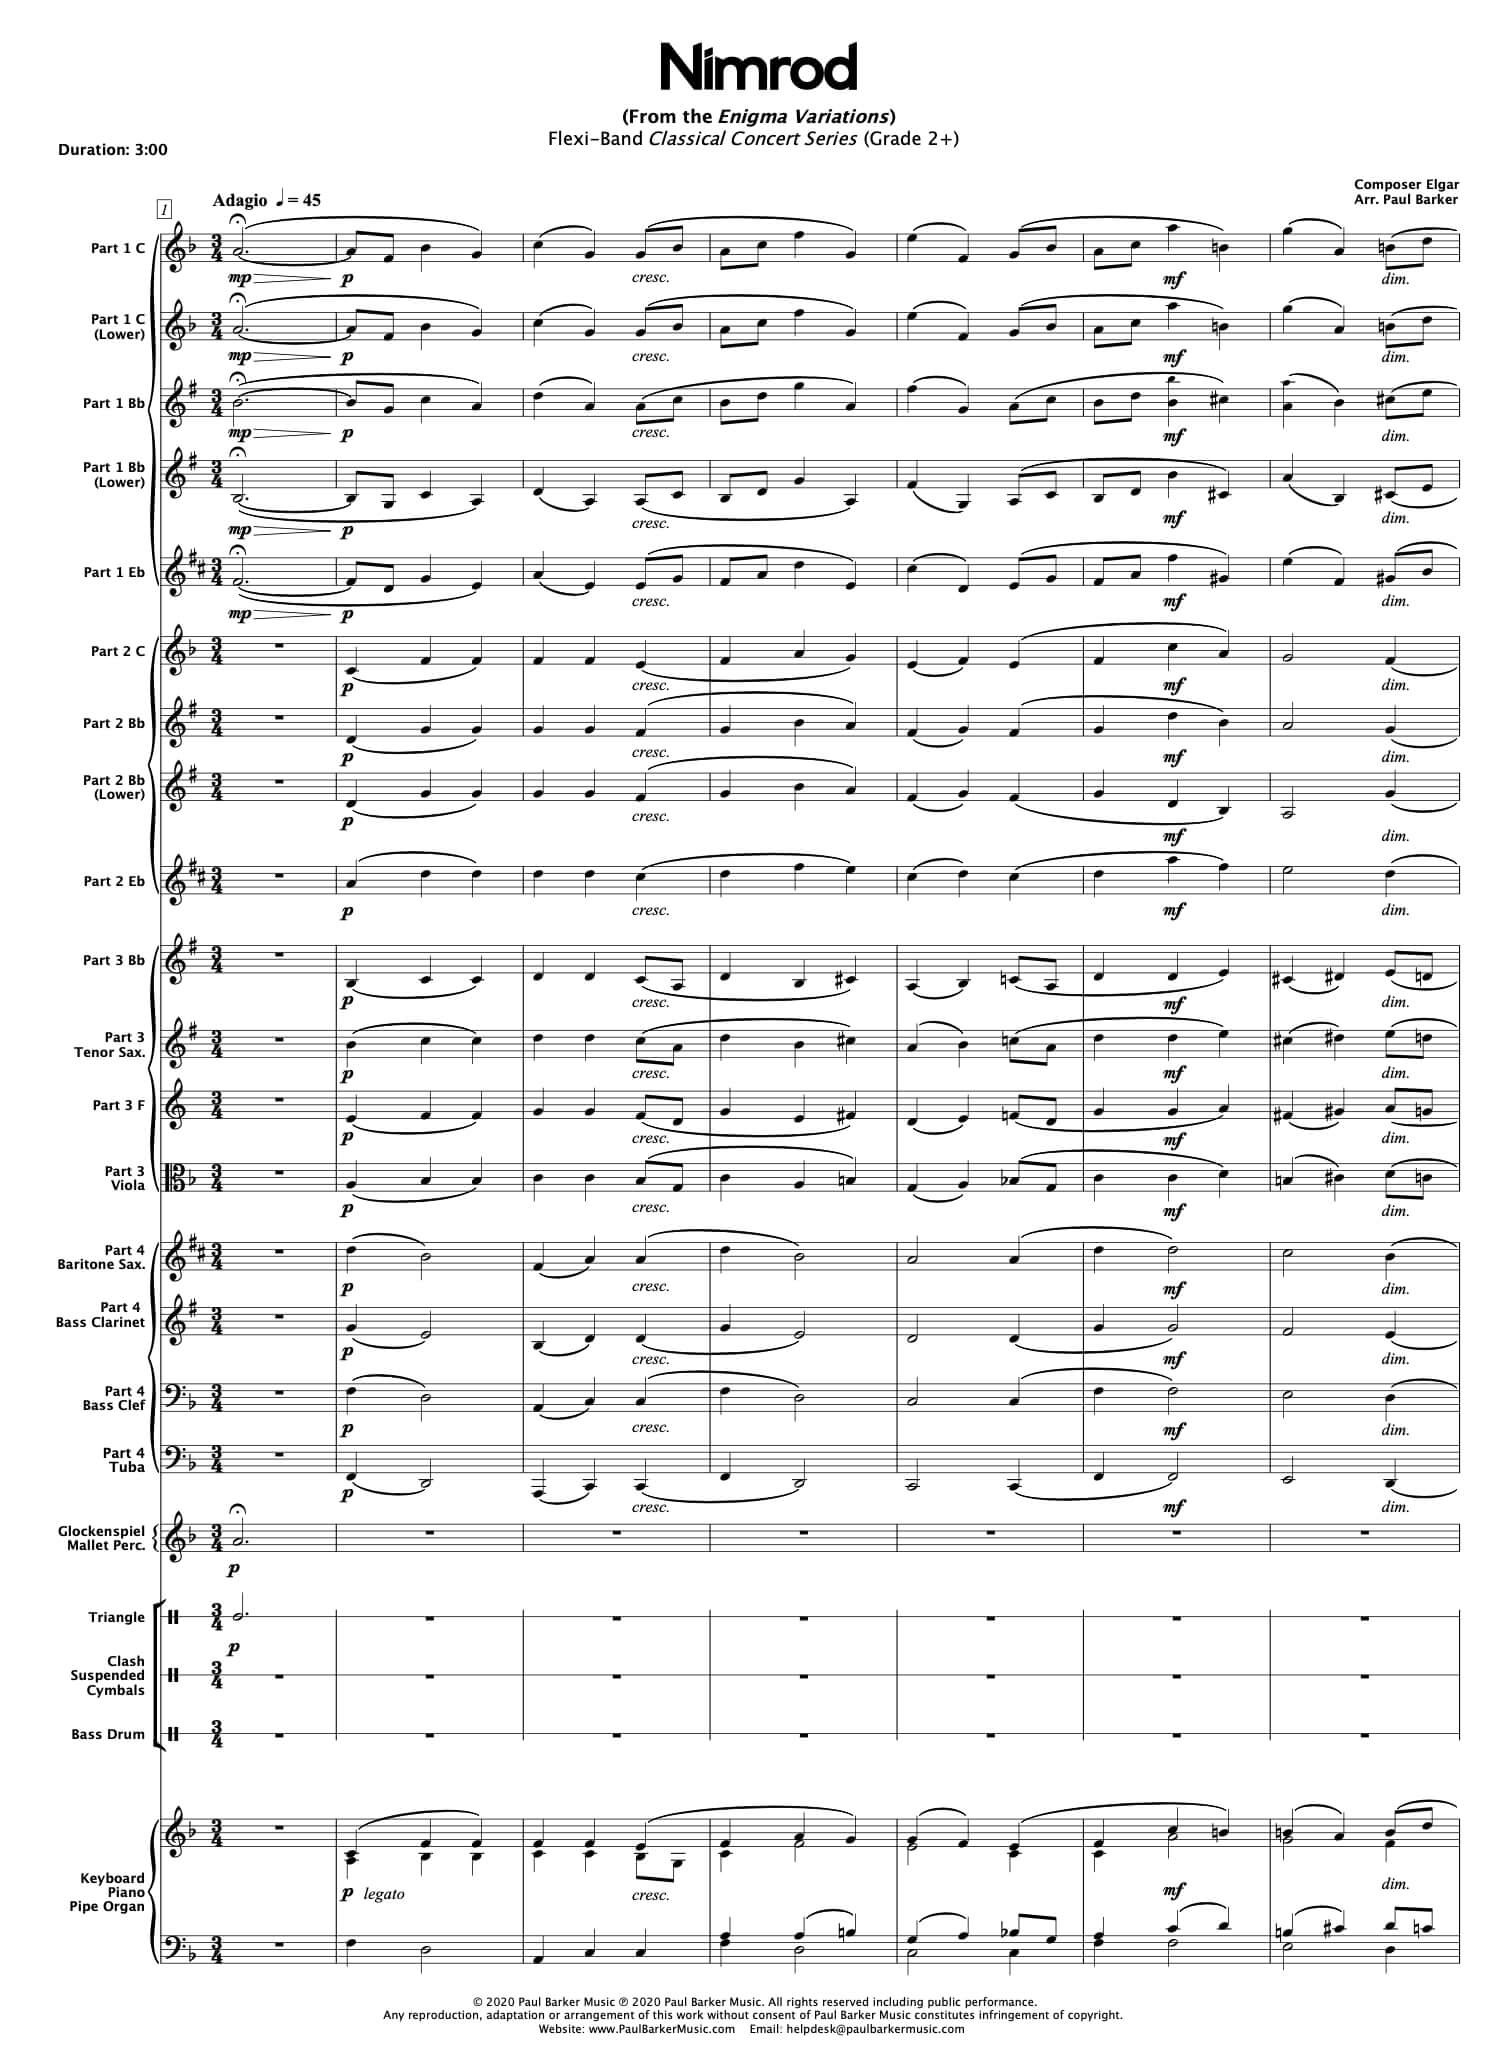 Classical Concert Series Multi-Bundle Value Pack 1 - Paul Barker Music 